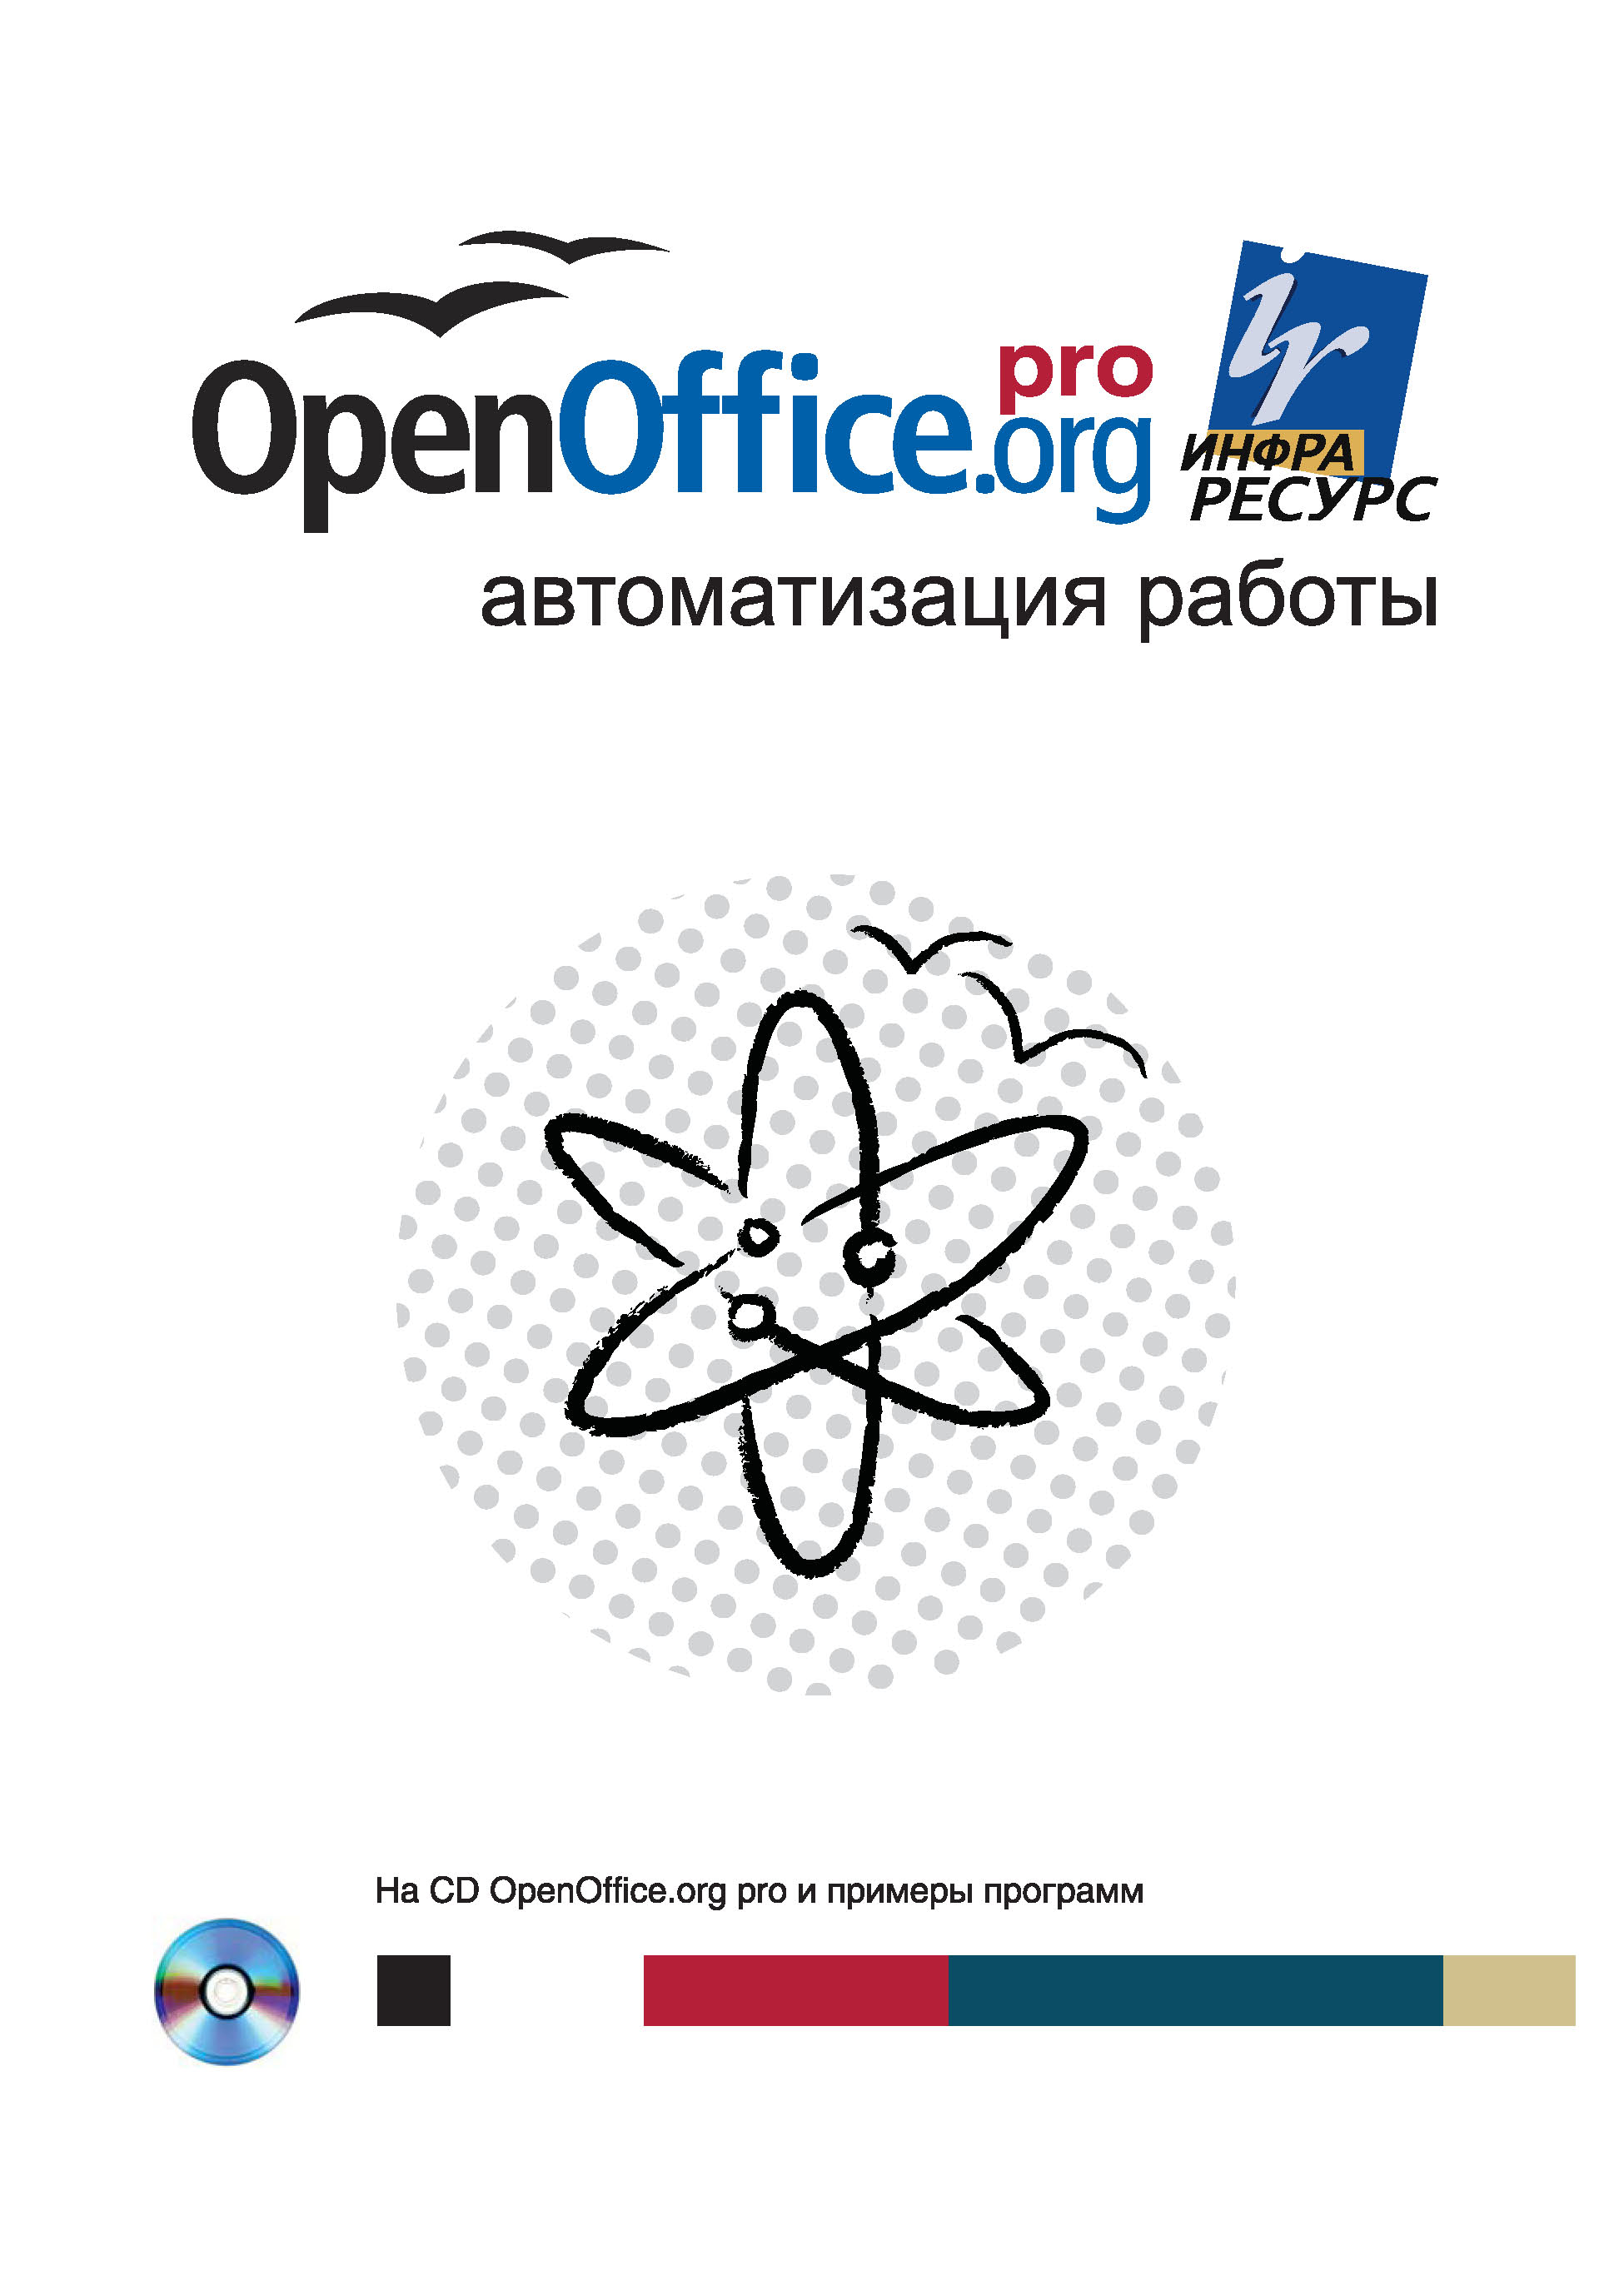 OpenOffice.org pro.Автоматизация работы